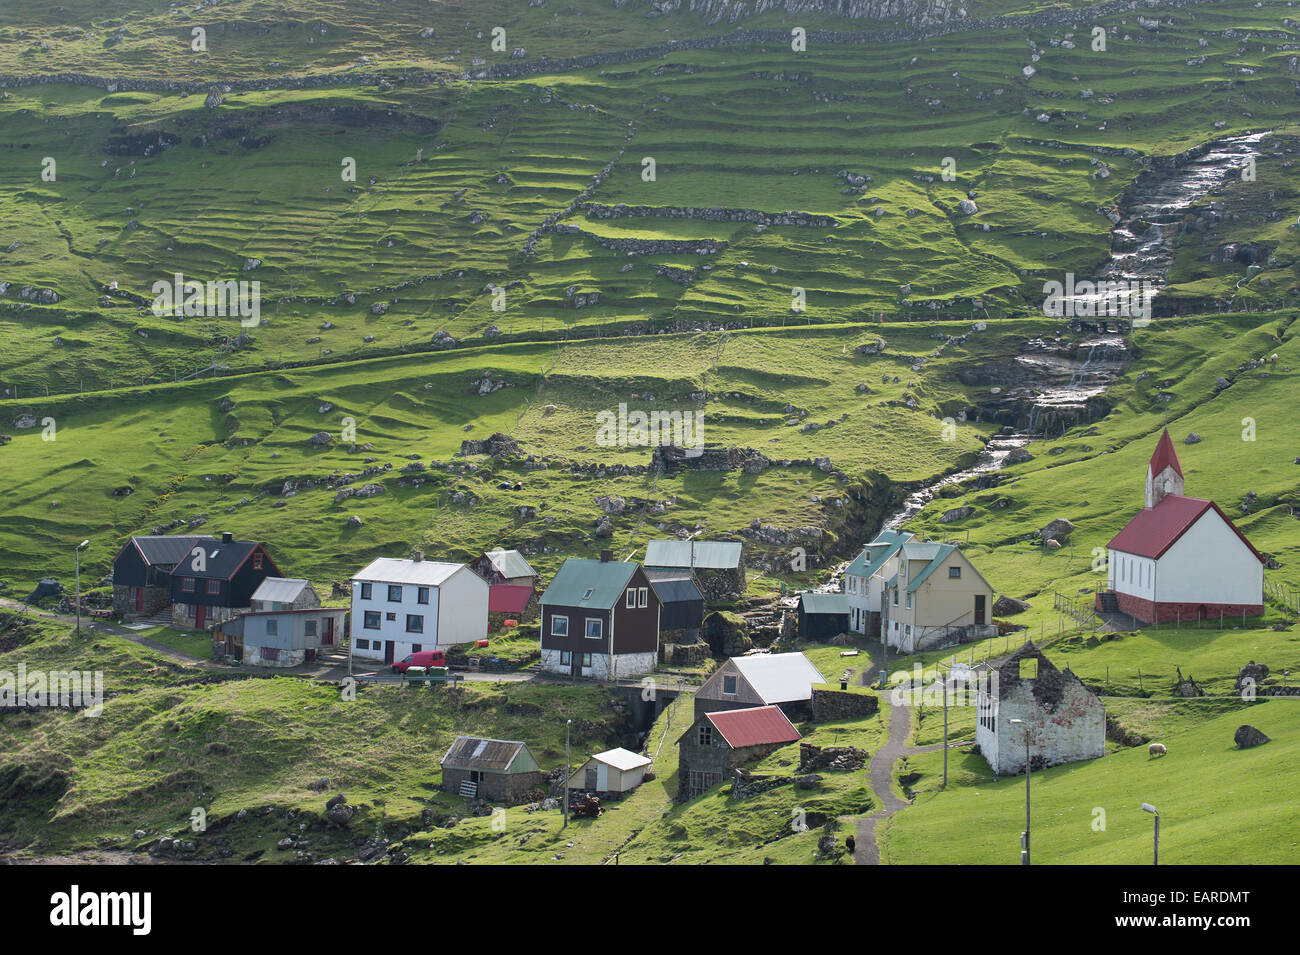 Weide und Creek, Dorf bedroht von Entvölkerung, Hattarvík, Fugloy, Norðoyar, Färöer Inseln, Dänemark Stockfoto